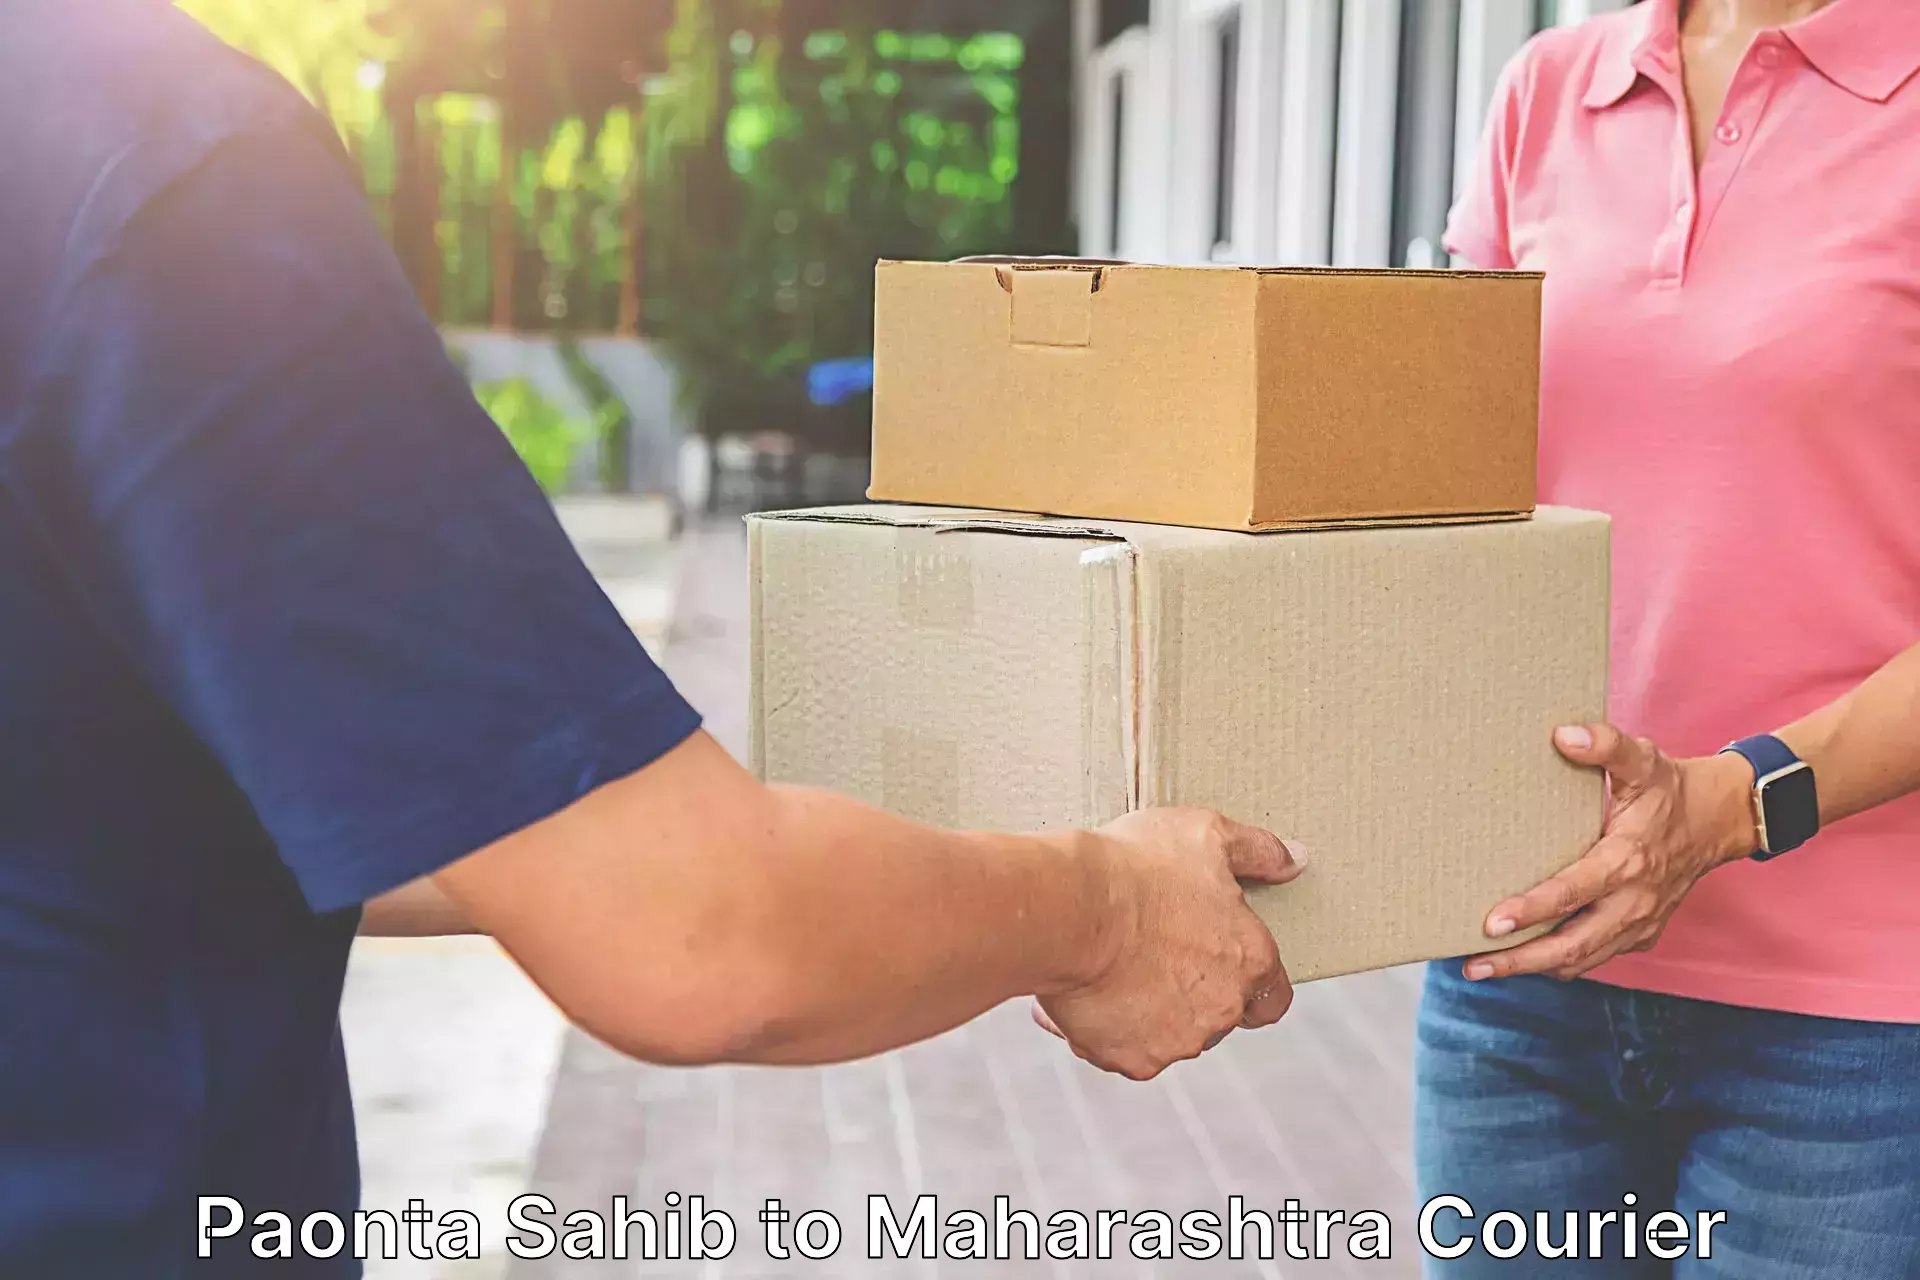 Cargo delivery service Paonta Sahib to Aurangabad